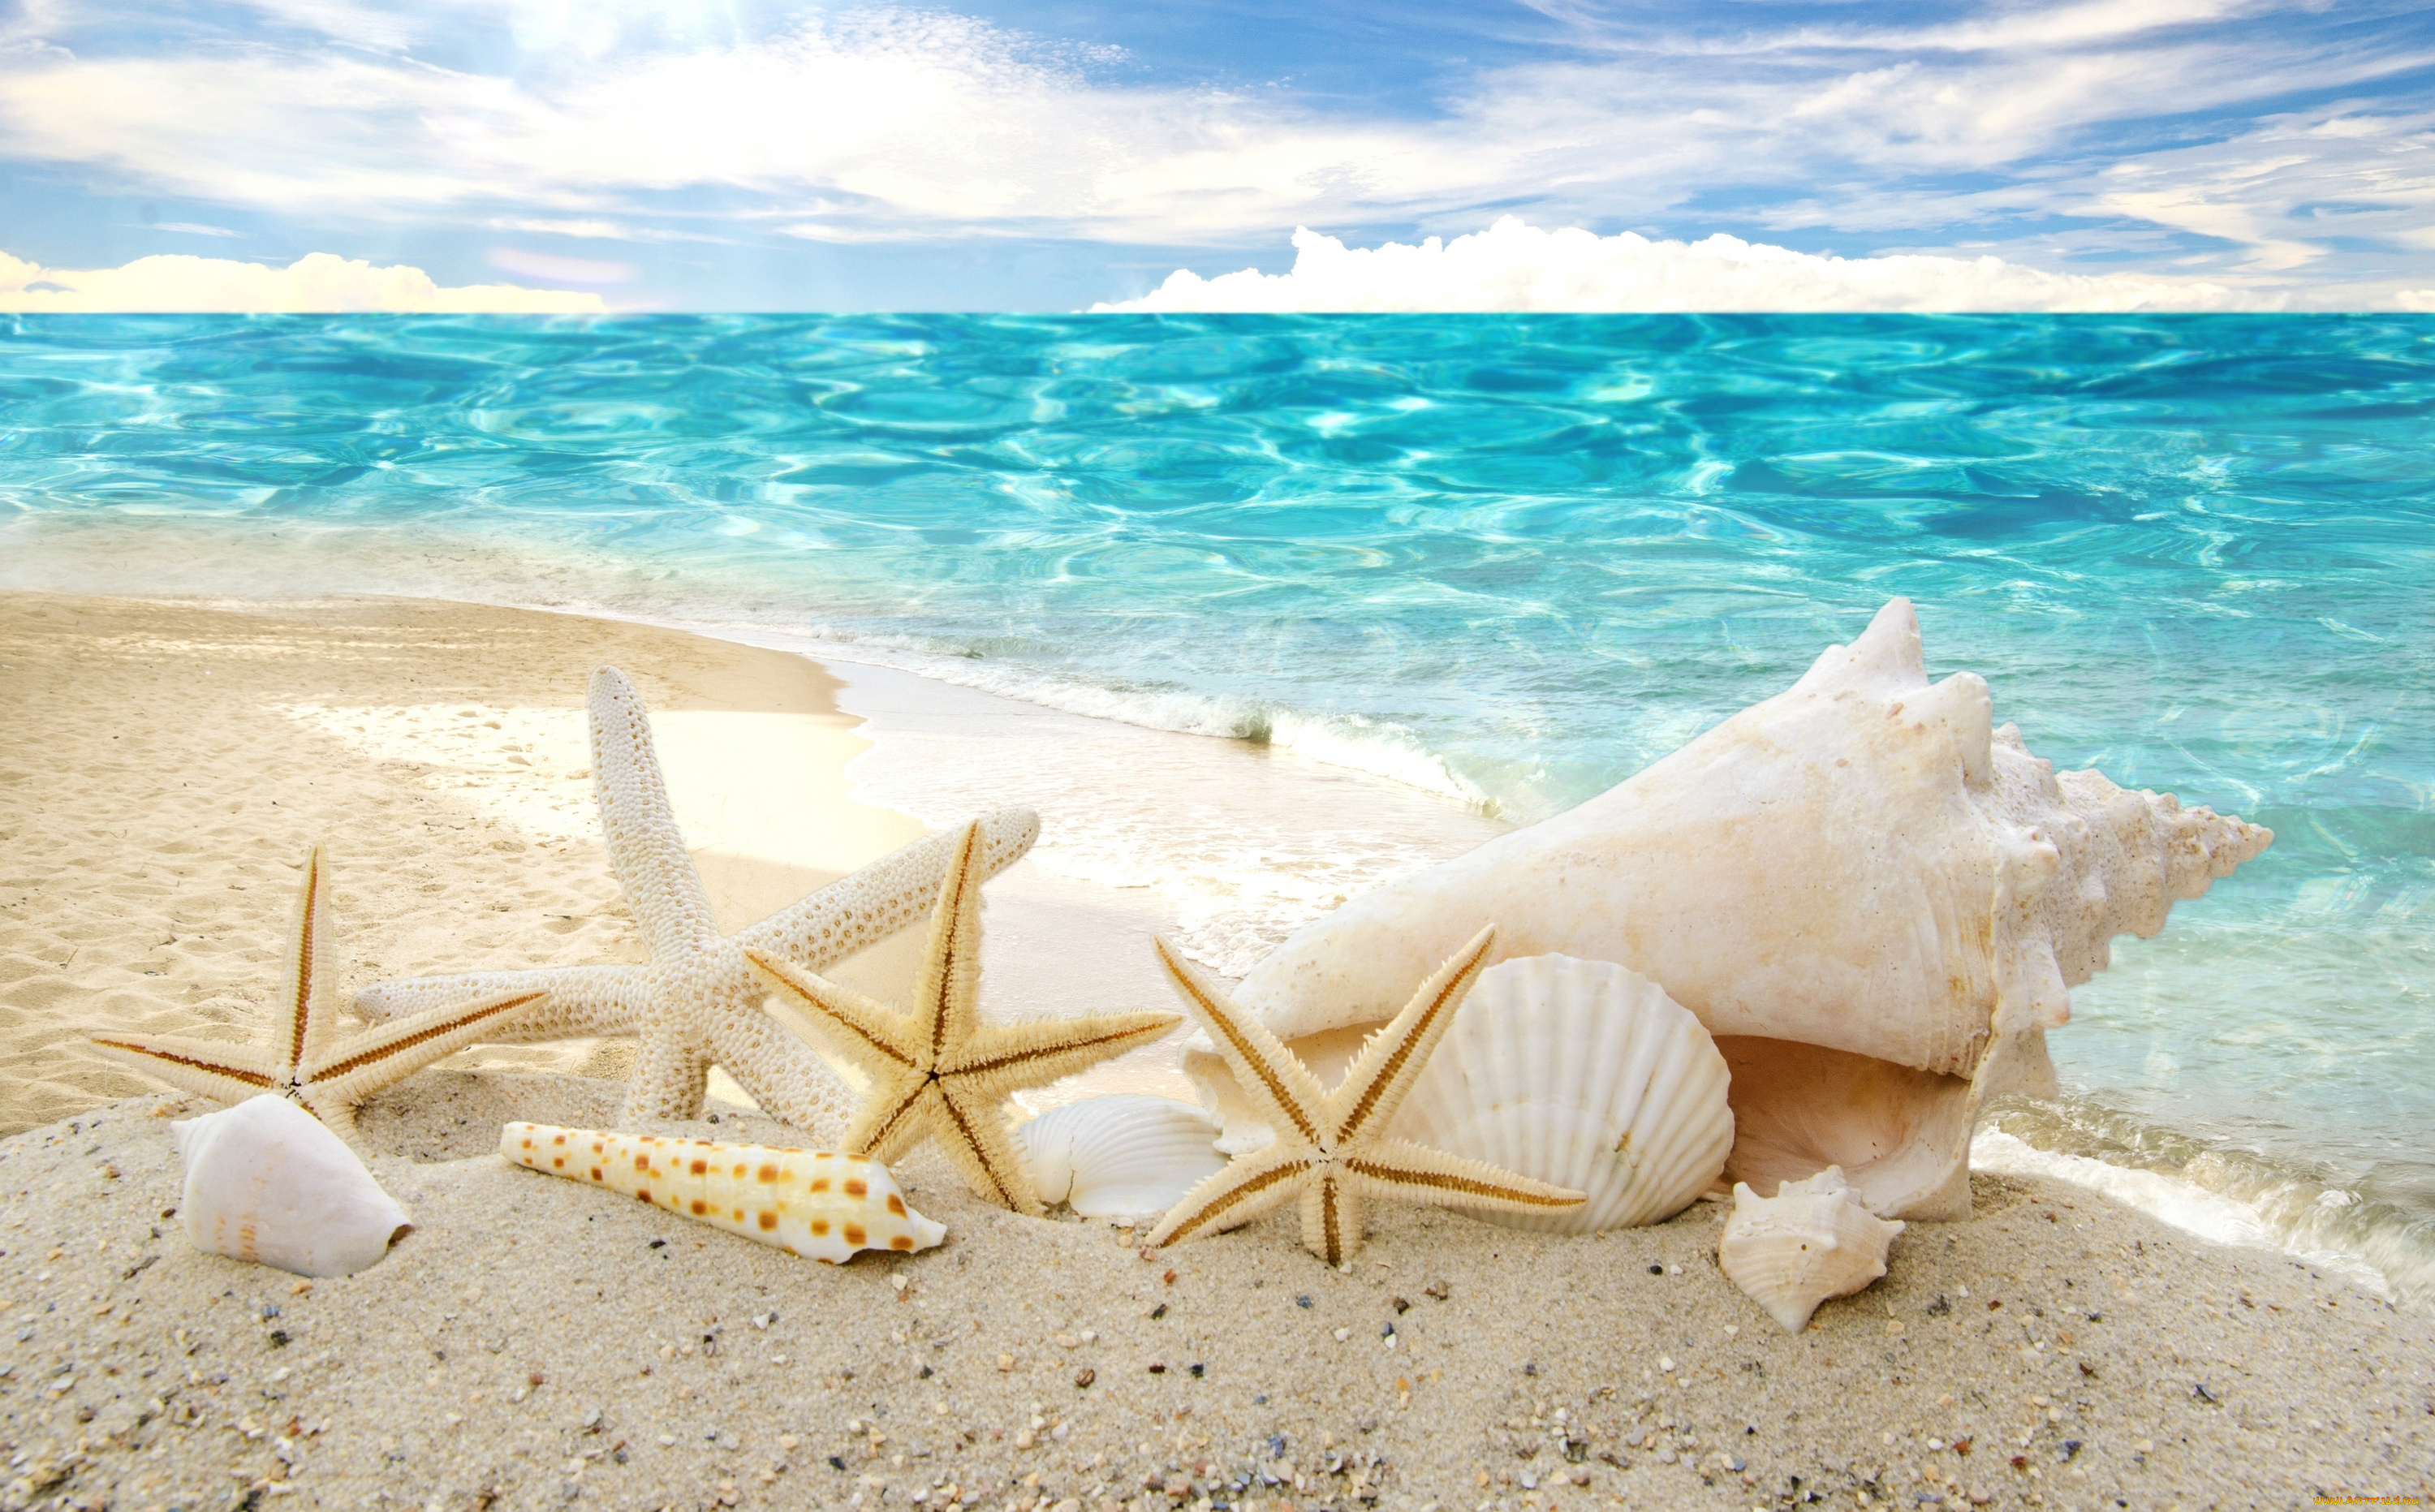 разное, ракушки, , кораллы, , декоративные, и, spa-камни, summer, море, песок, sunshine, солнце, sea, beach, seashells, starfishes, пляж, звезды, sky, sand